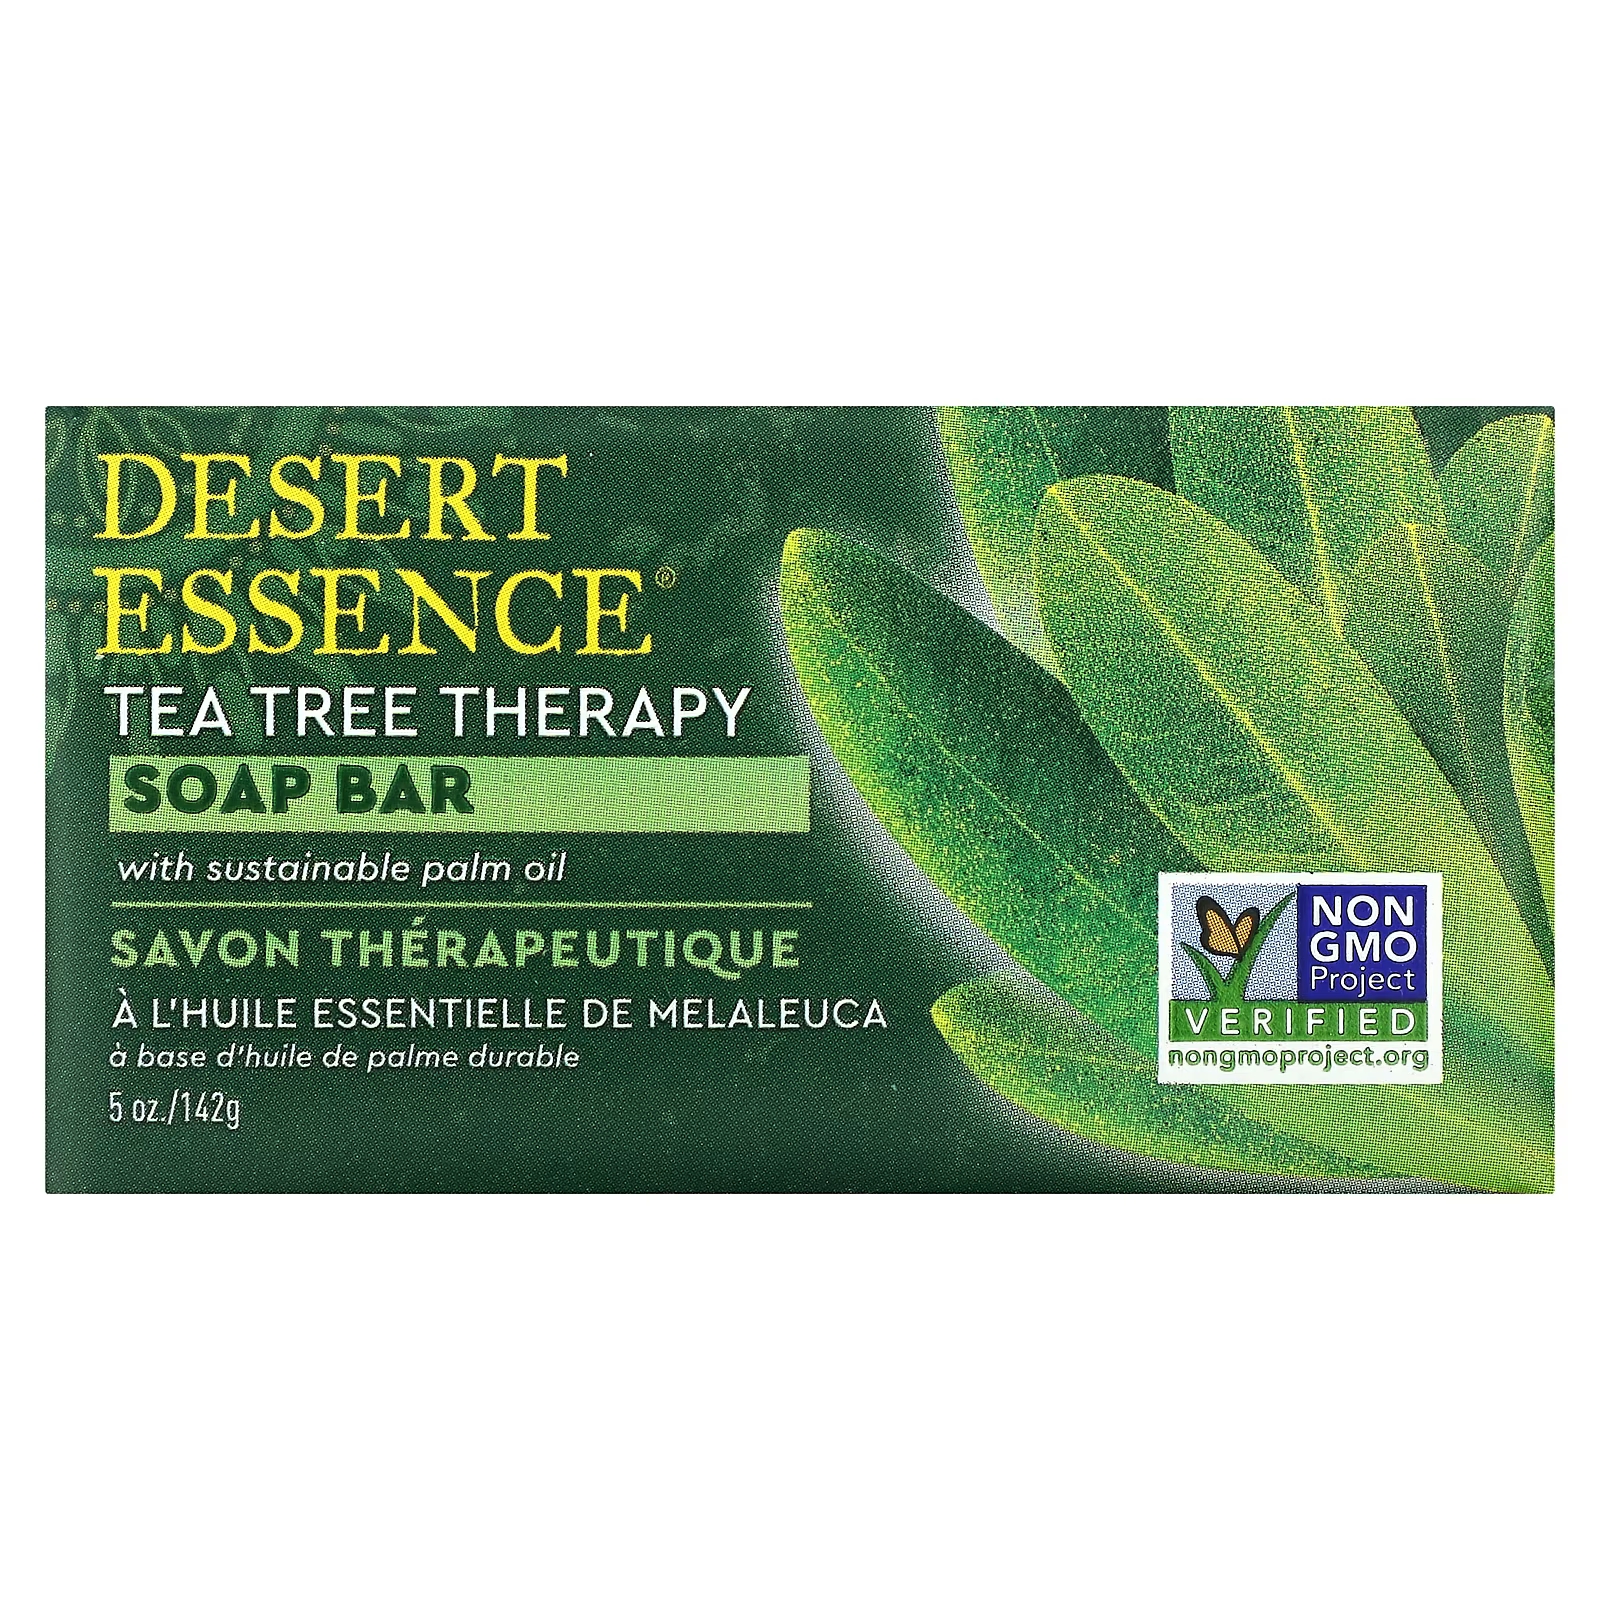 Мыло Tea Tree Therapy, 5 унций (142 г) Desert Essence desert essence мыло кремовый кокос 5 унций 142 г